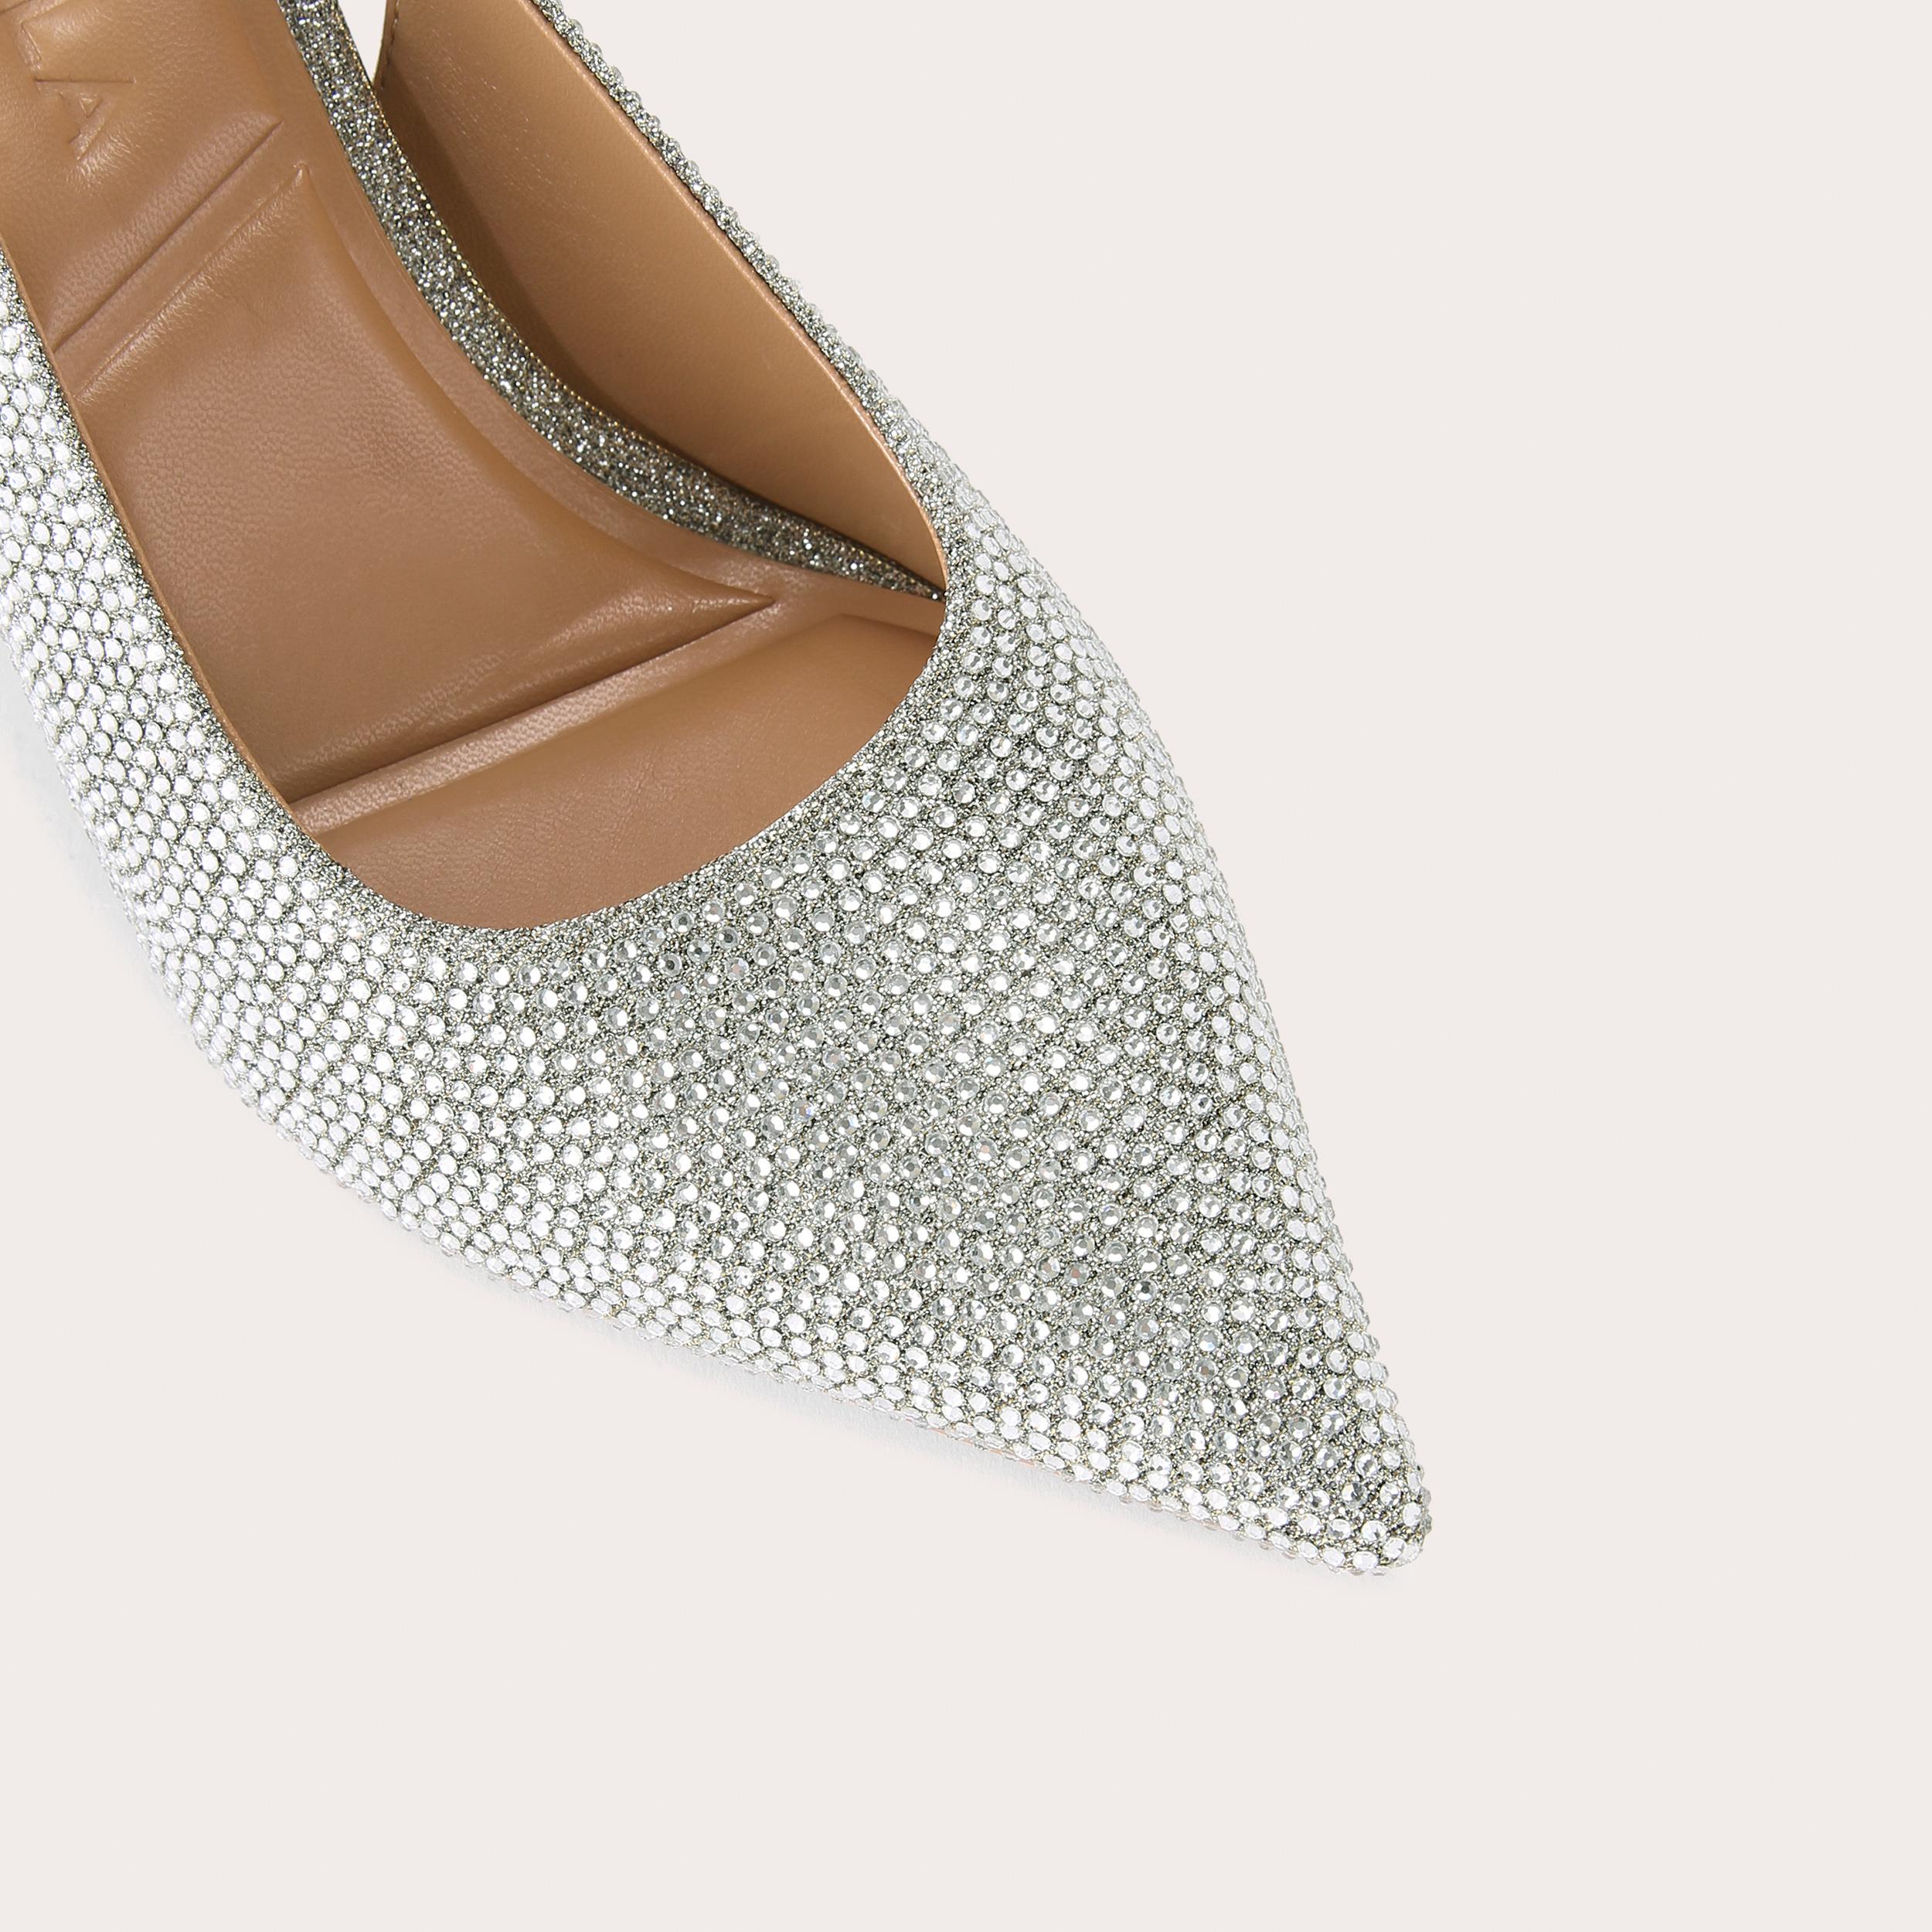 SYMMETRY SLING 90 Silver Fabric Slingback Heels by CARVELA